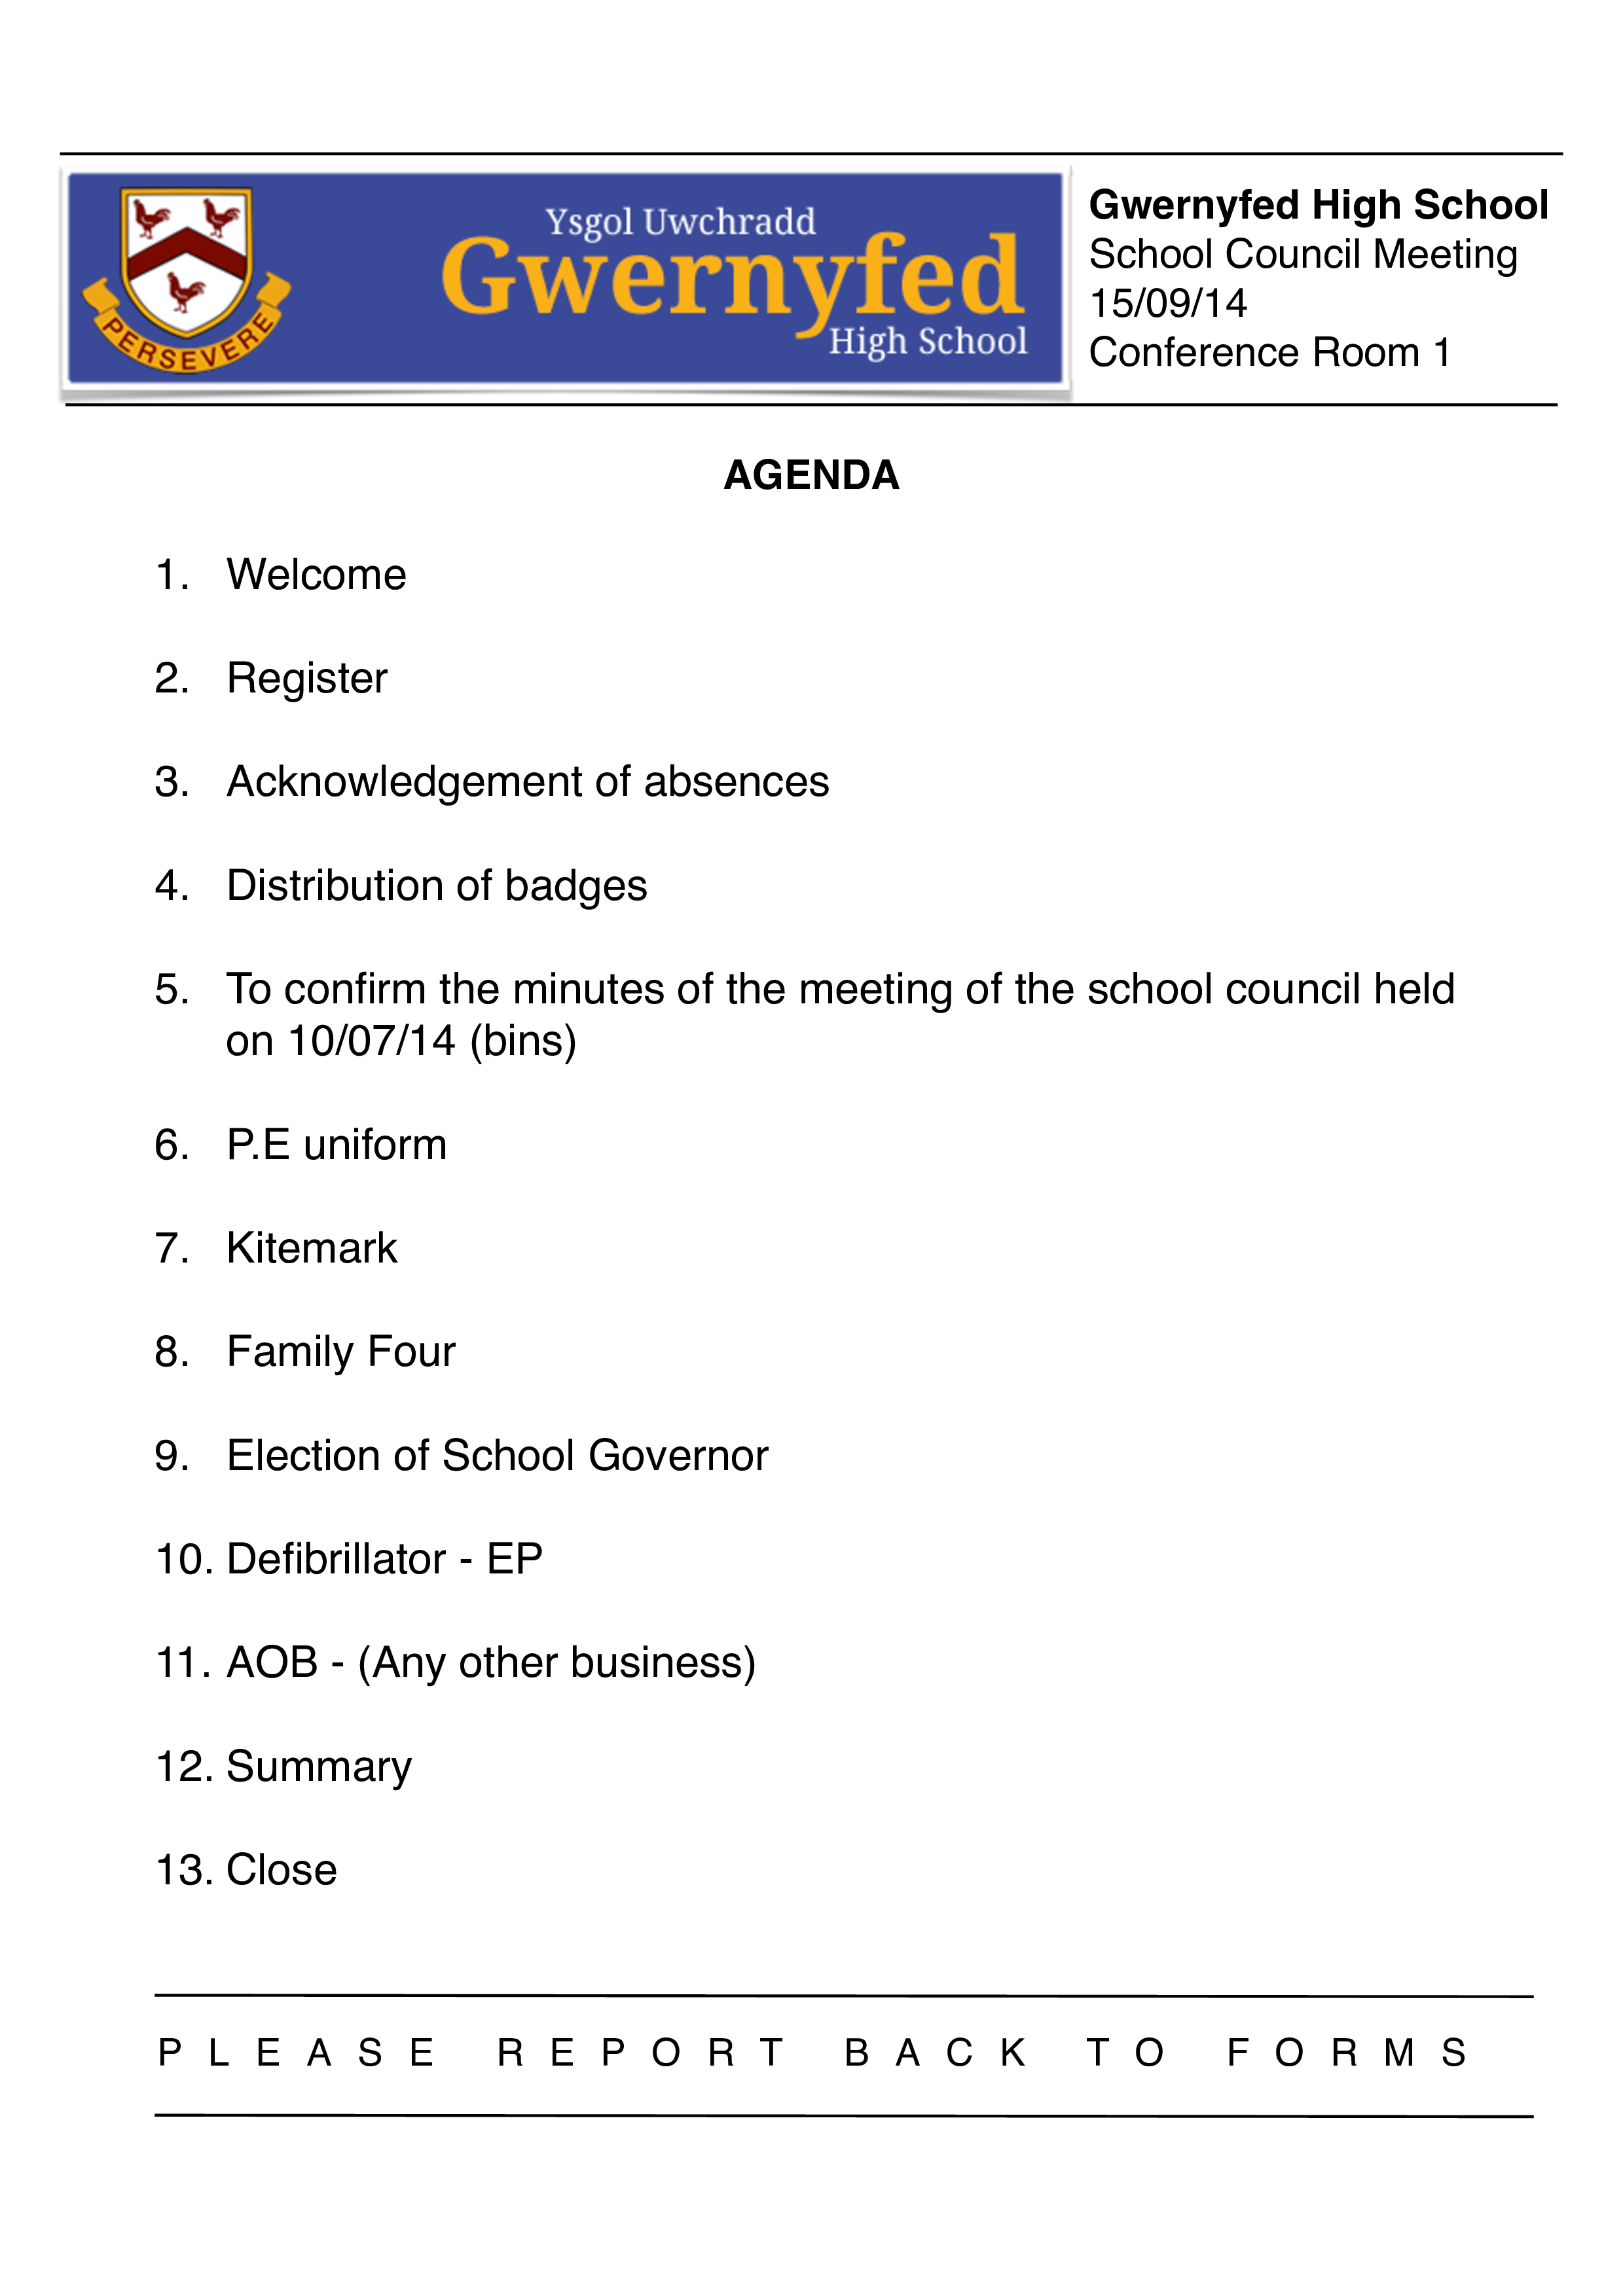 School Council Meeting Agenda Template 模板